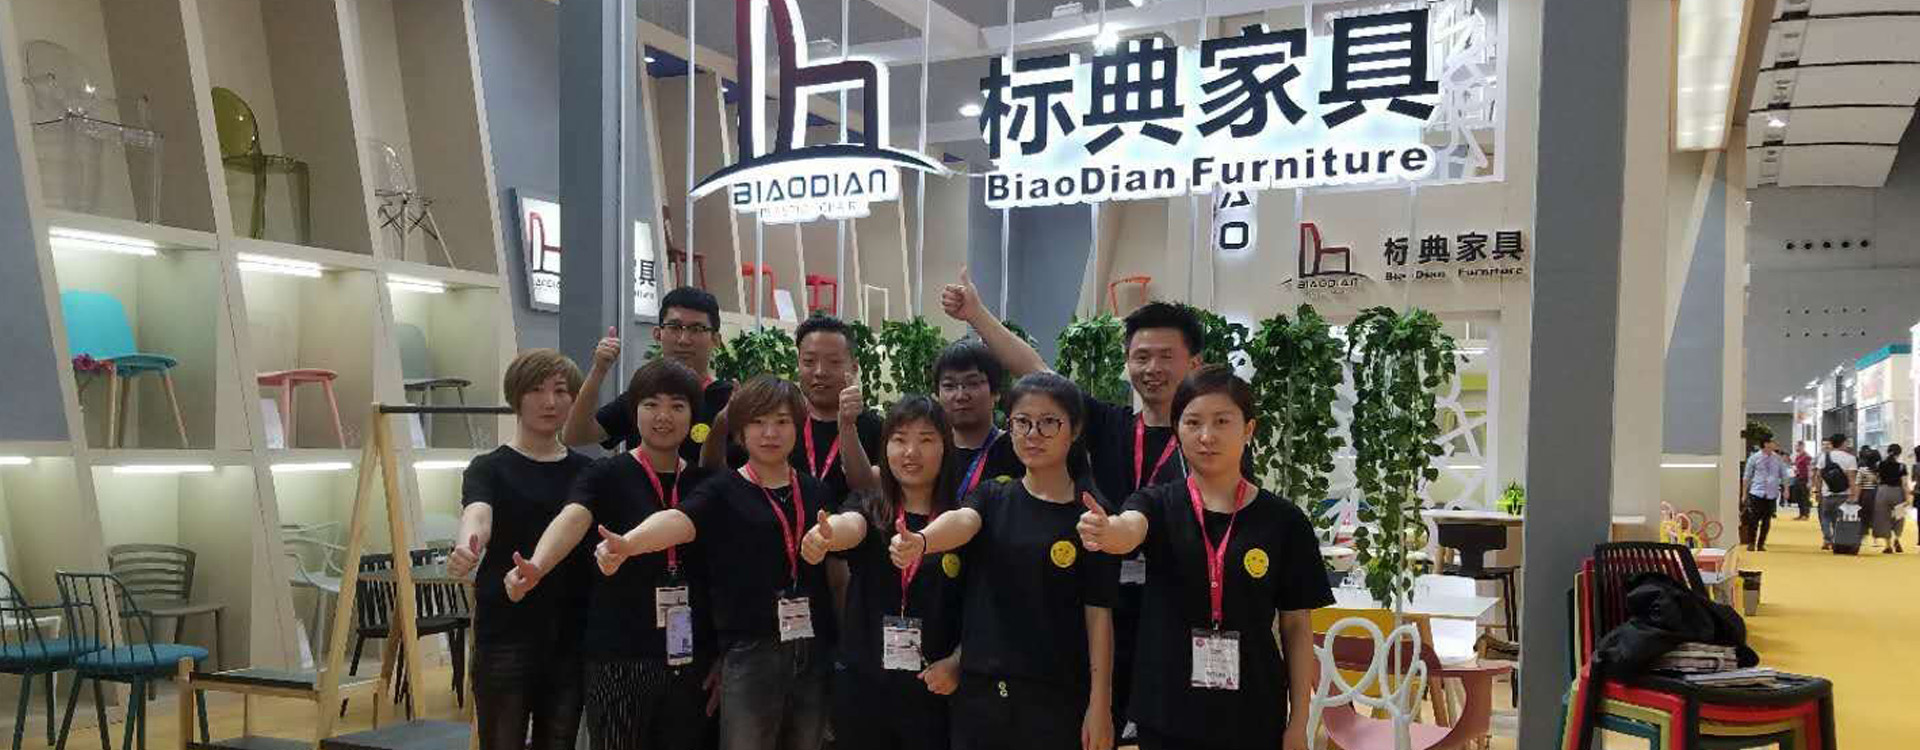 Biaodian furniture exhibition: the forty-first China (Guangzhou) International Furniture Fair